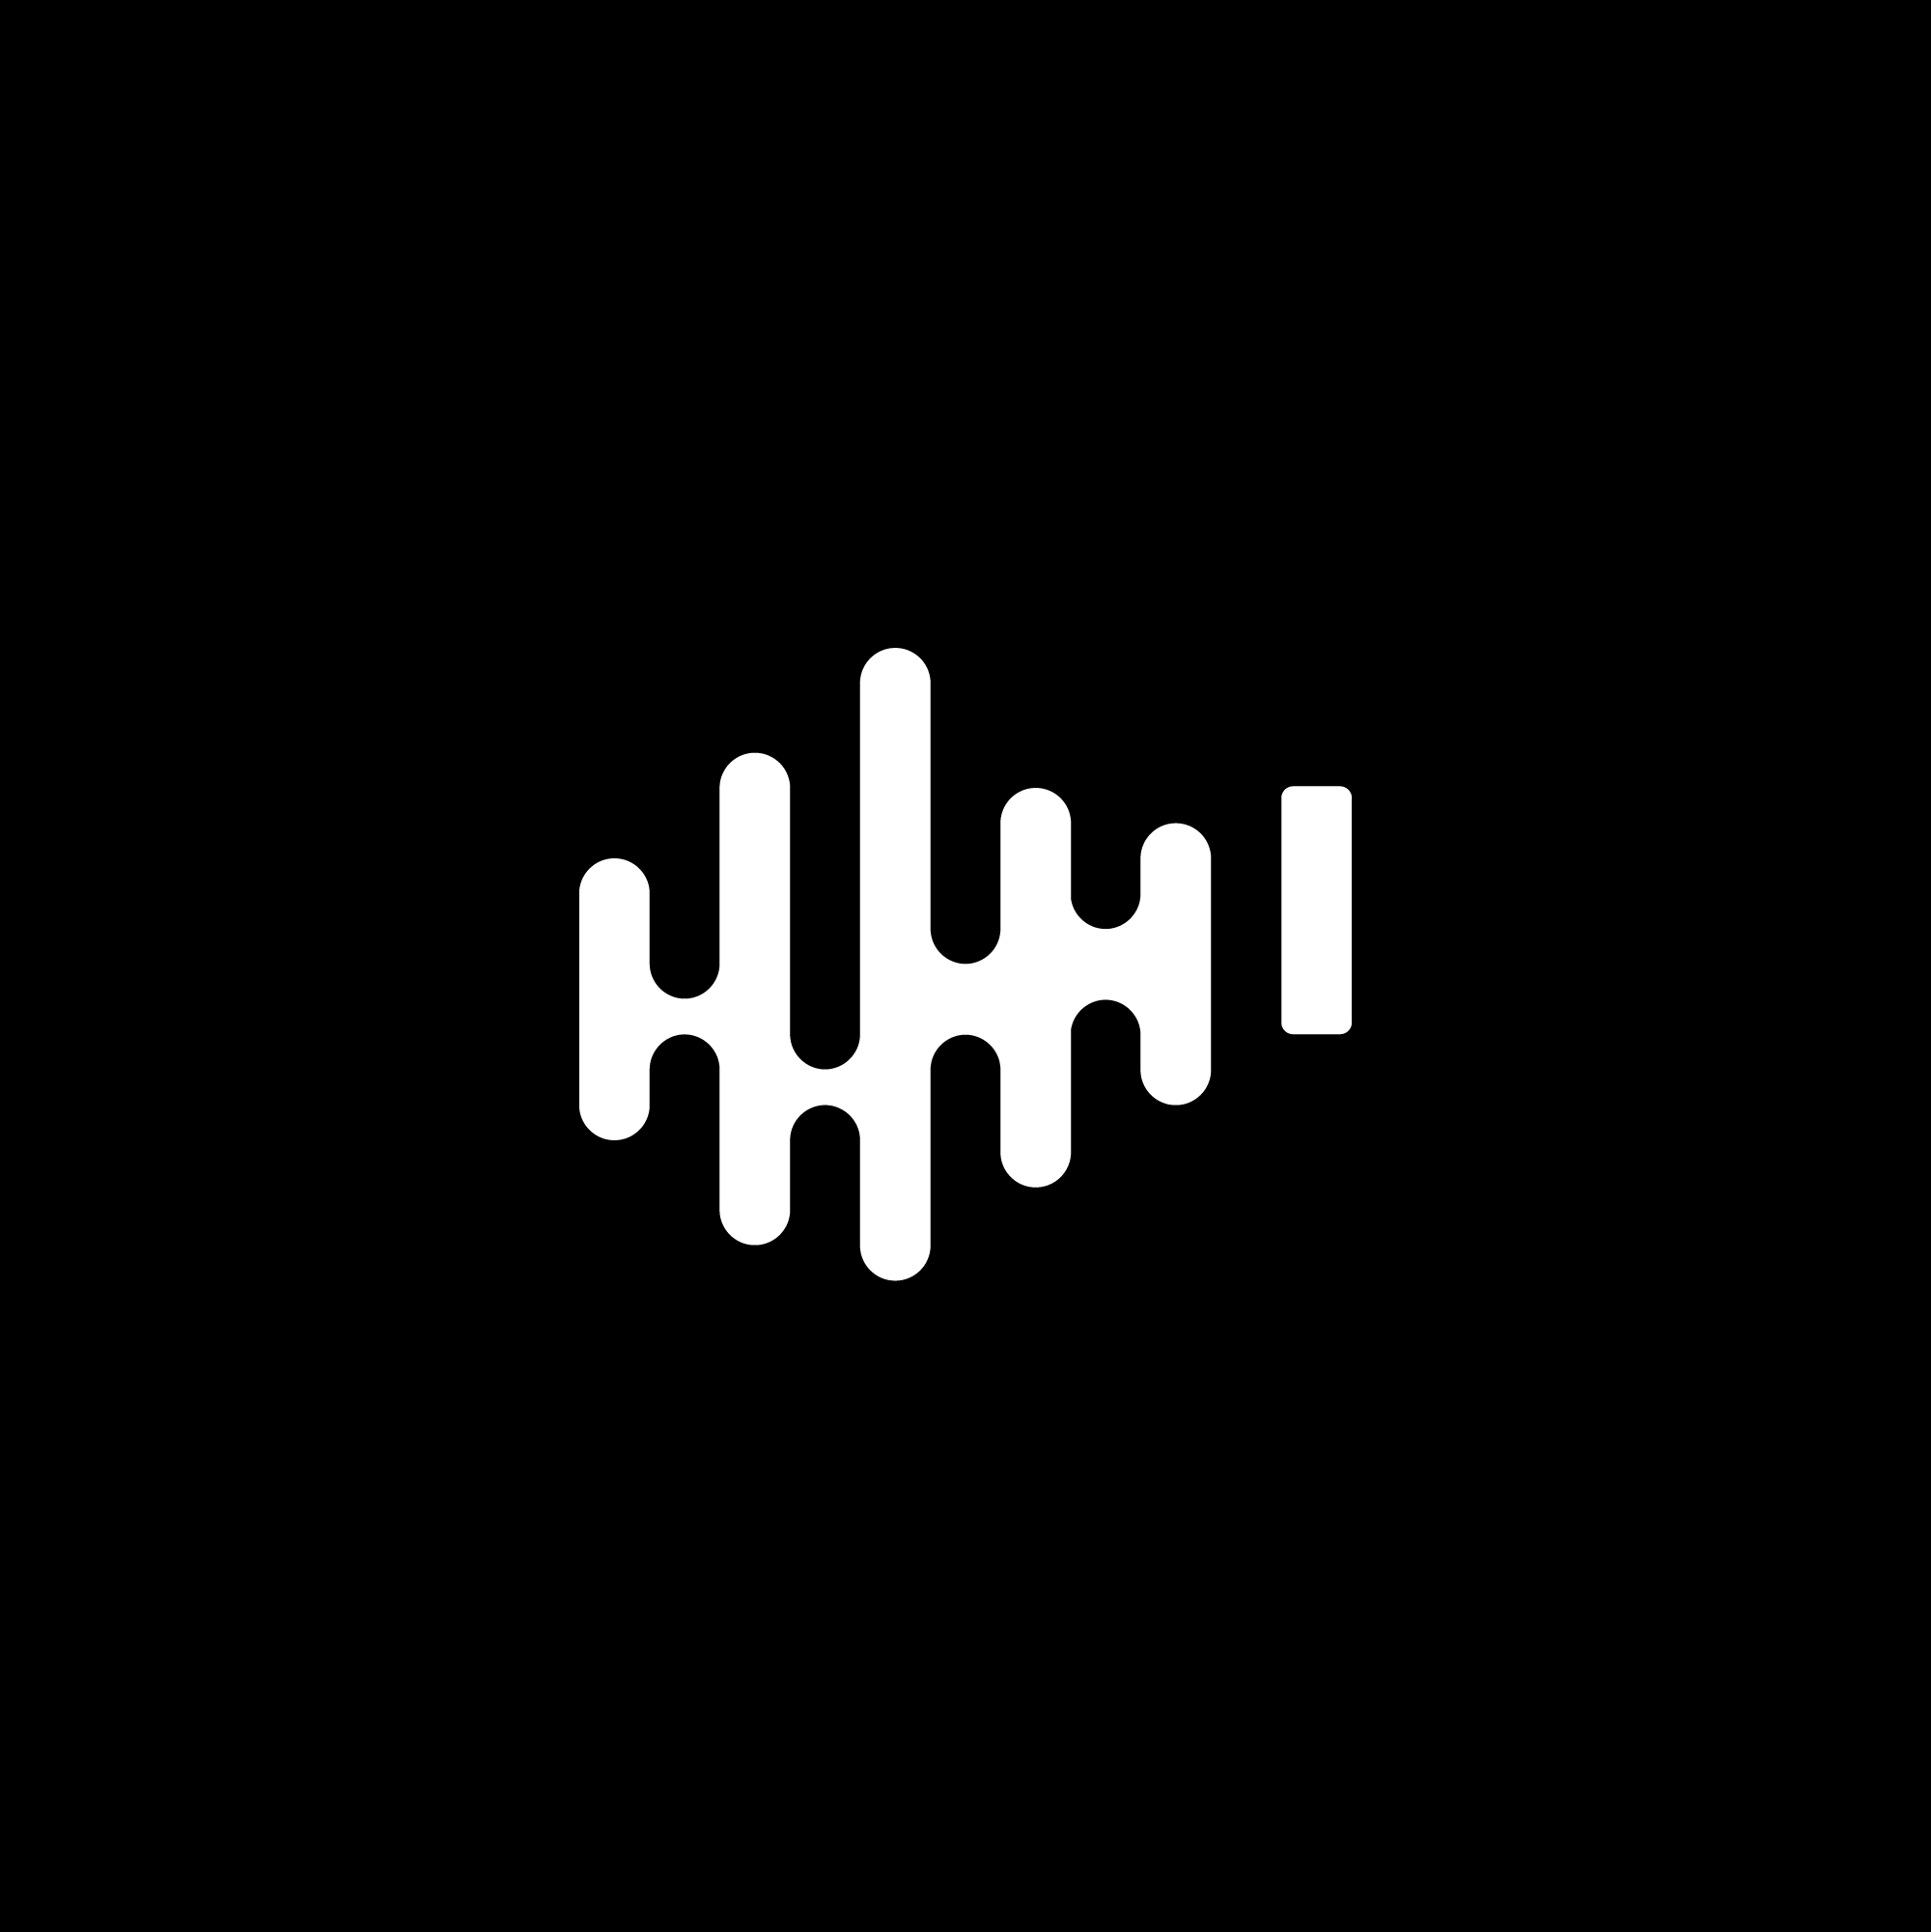 Minimalistic black and white logo sound wave